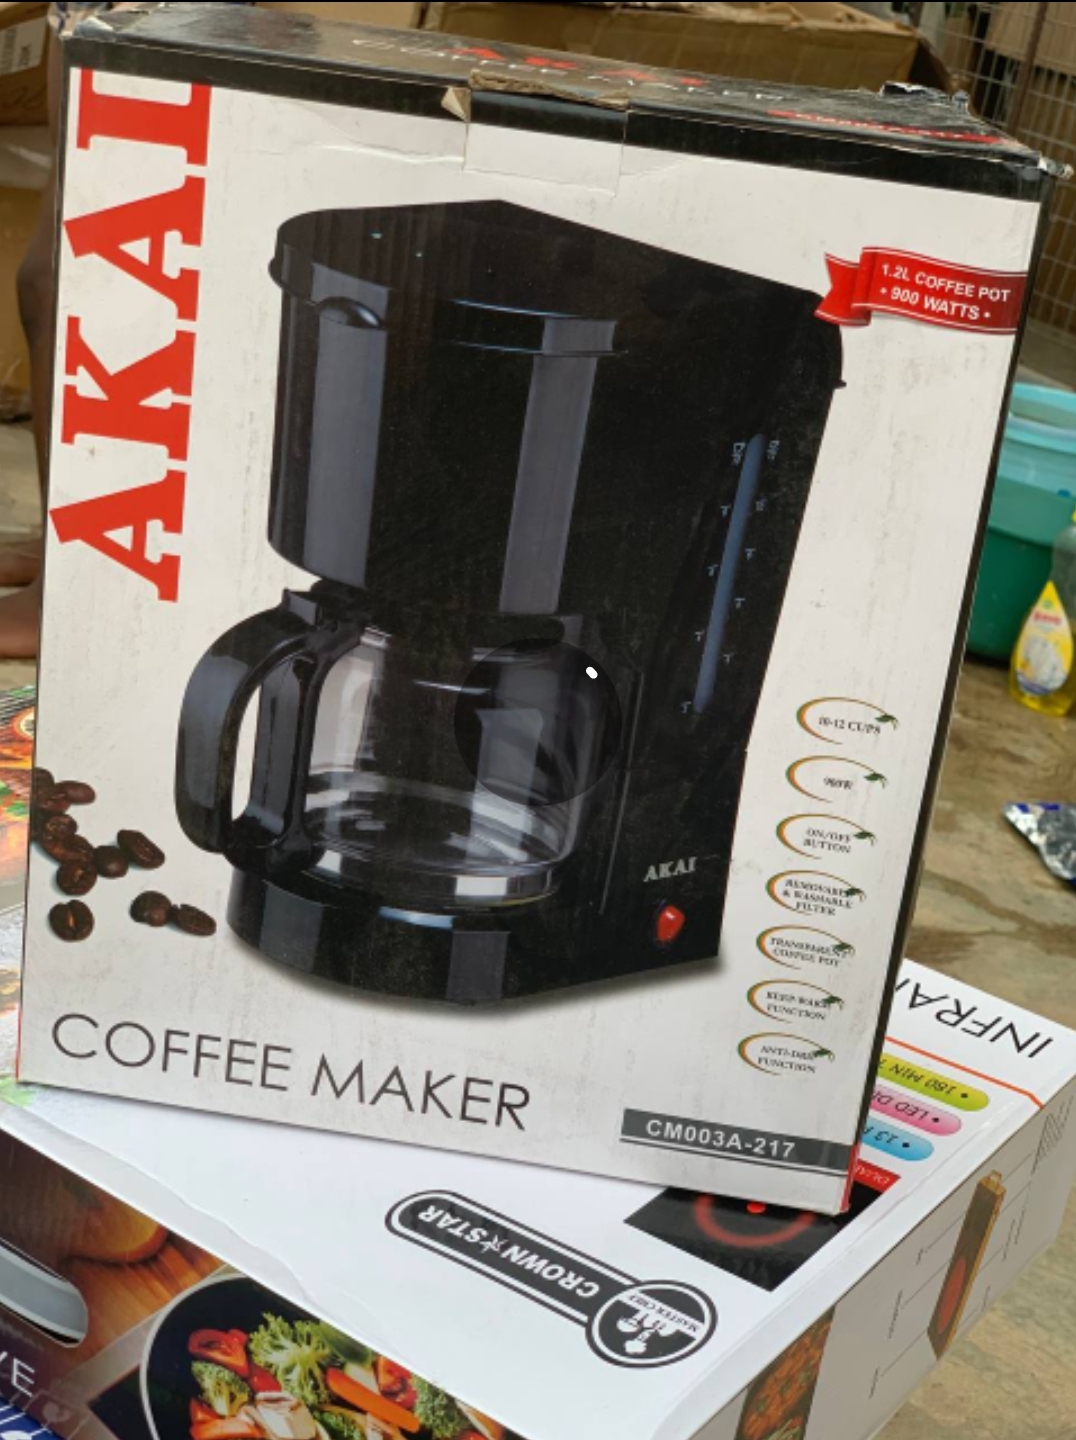 Akai Coffee Maker 1.2 Liters